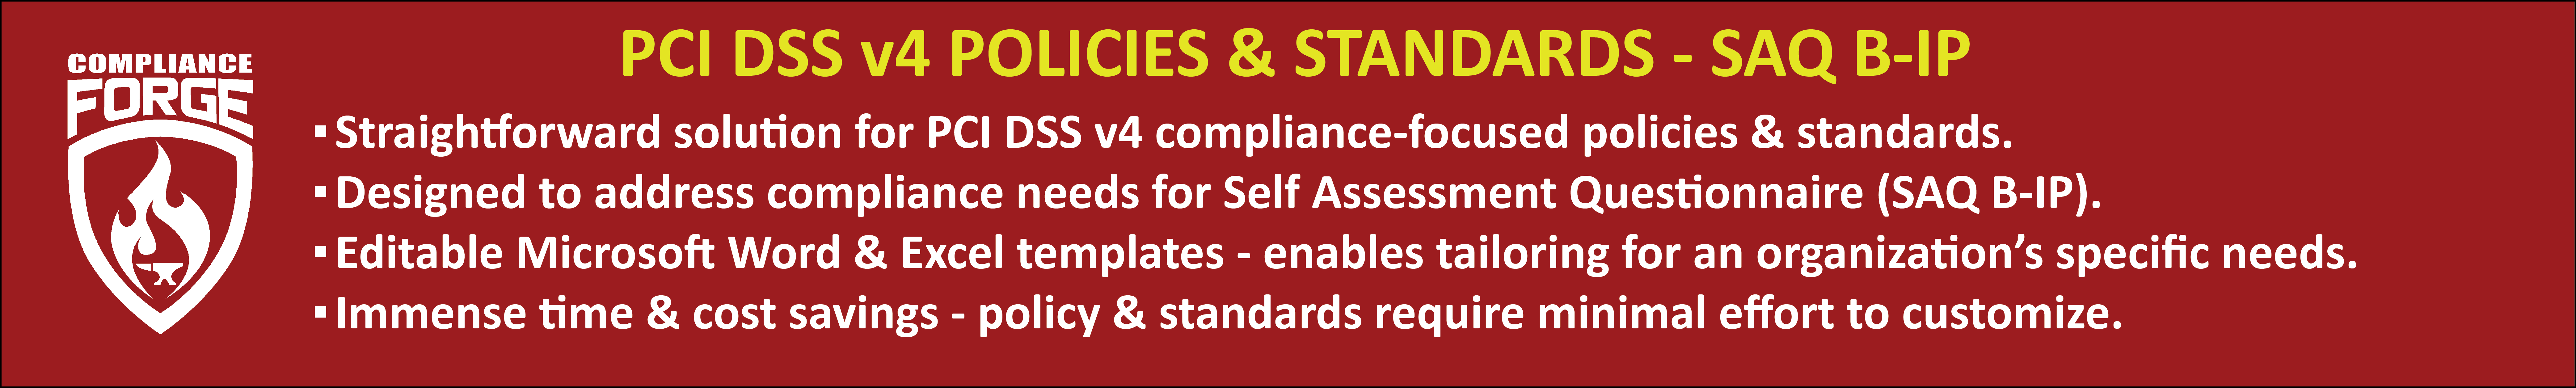 PCI DSS v4 SAQ B-IP policies and standards example